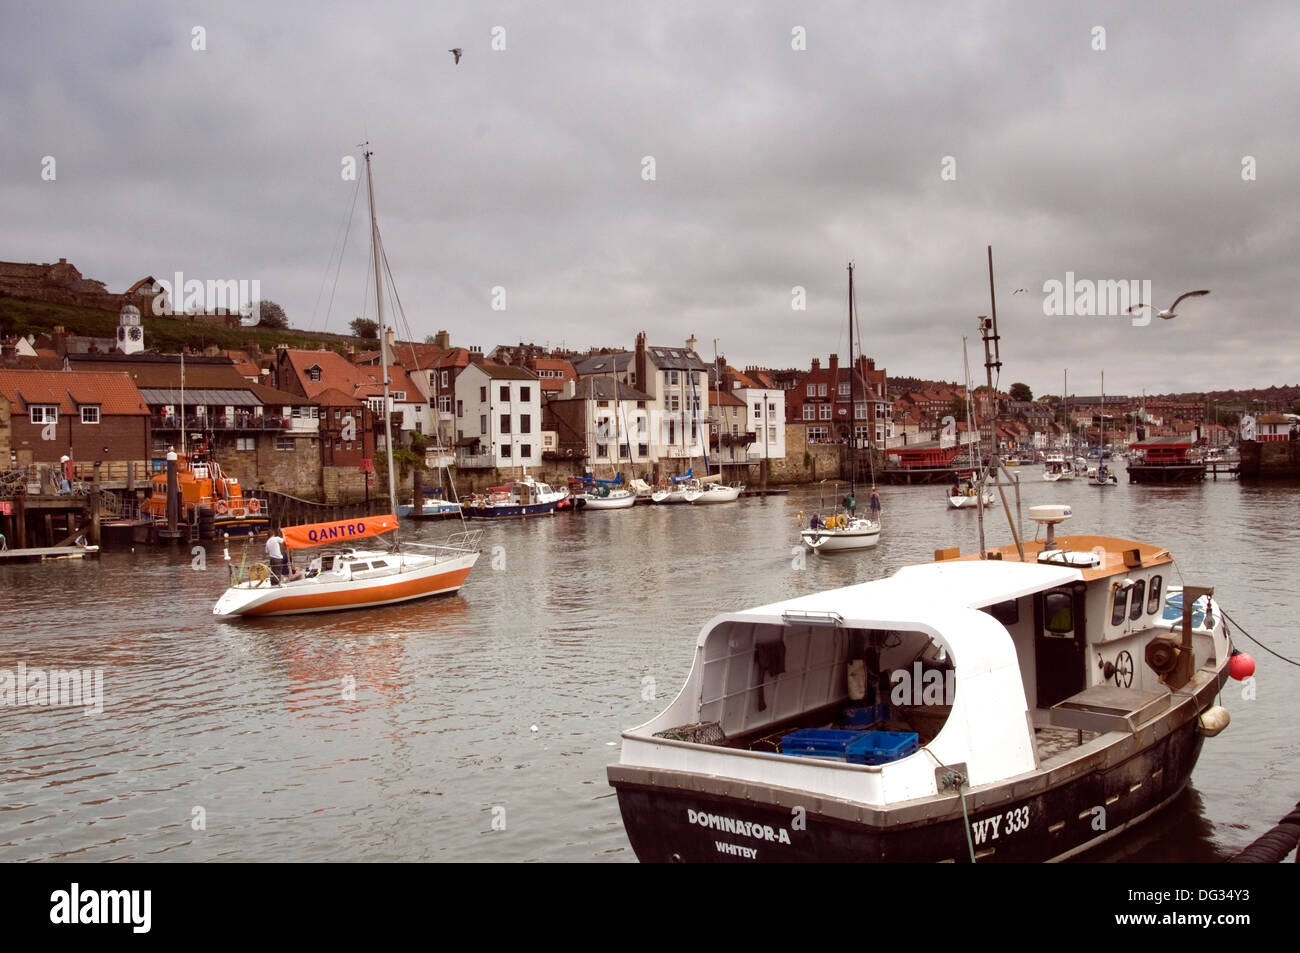 Boat Dock, Whitby, West Yorkshire, England Stock Photo by ©DesignPicsInc  31790345